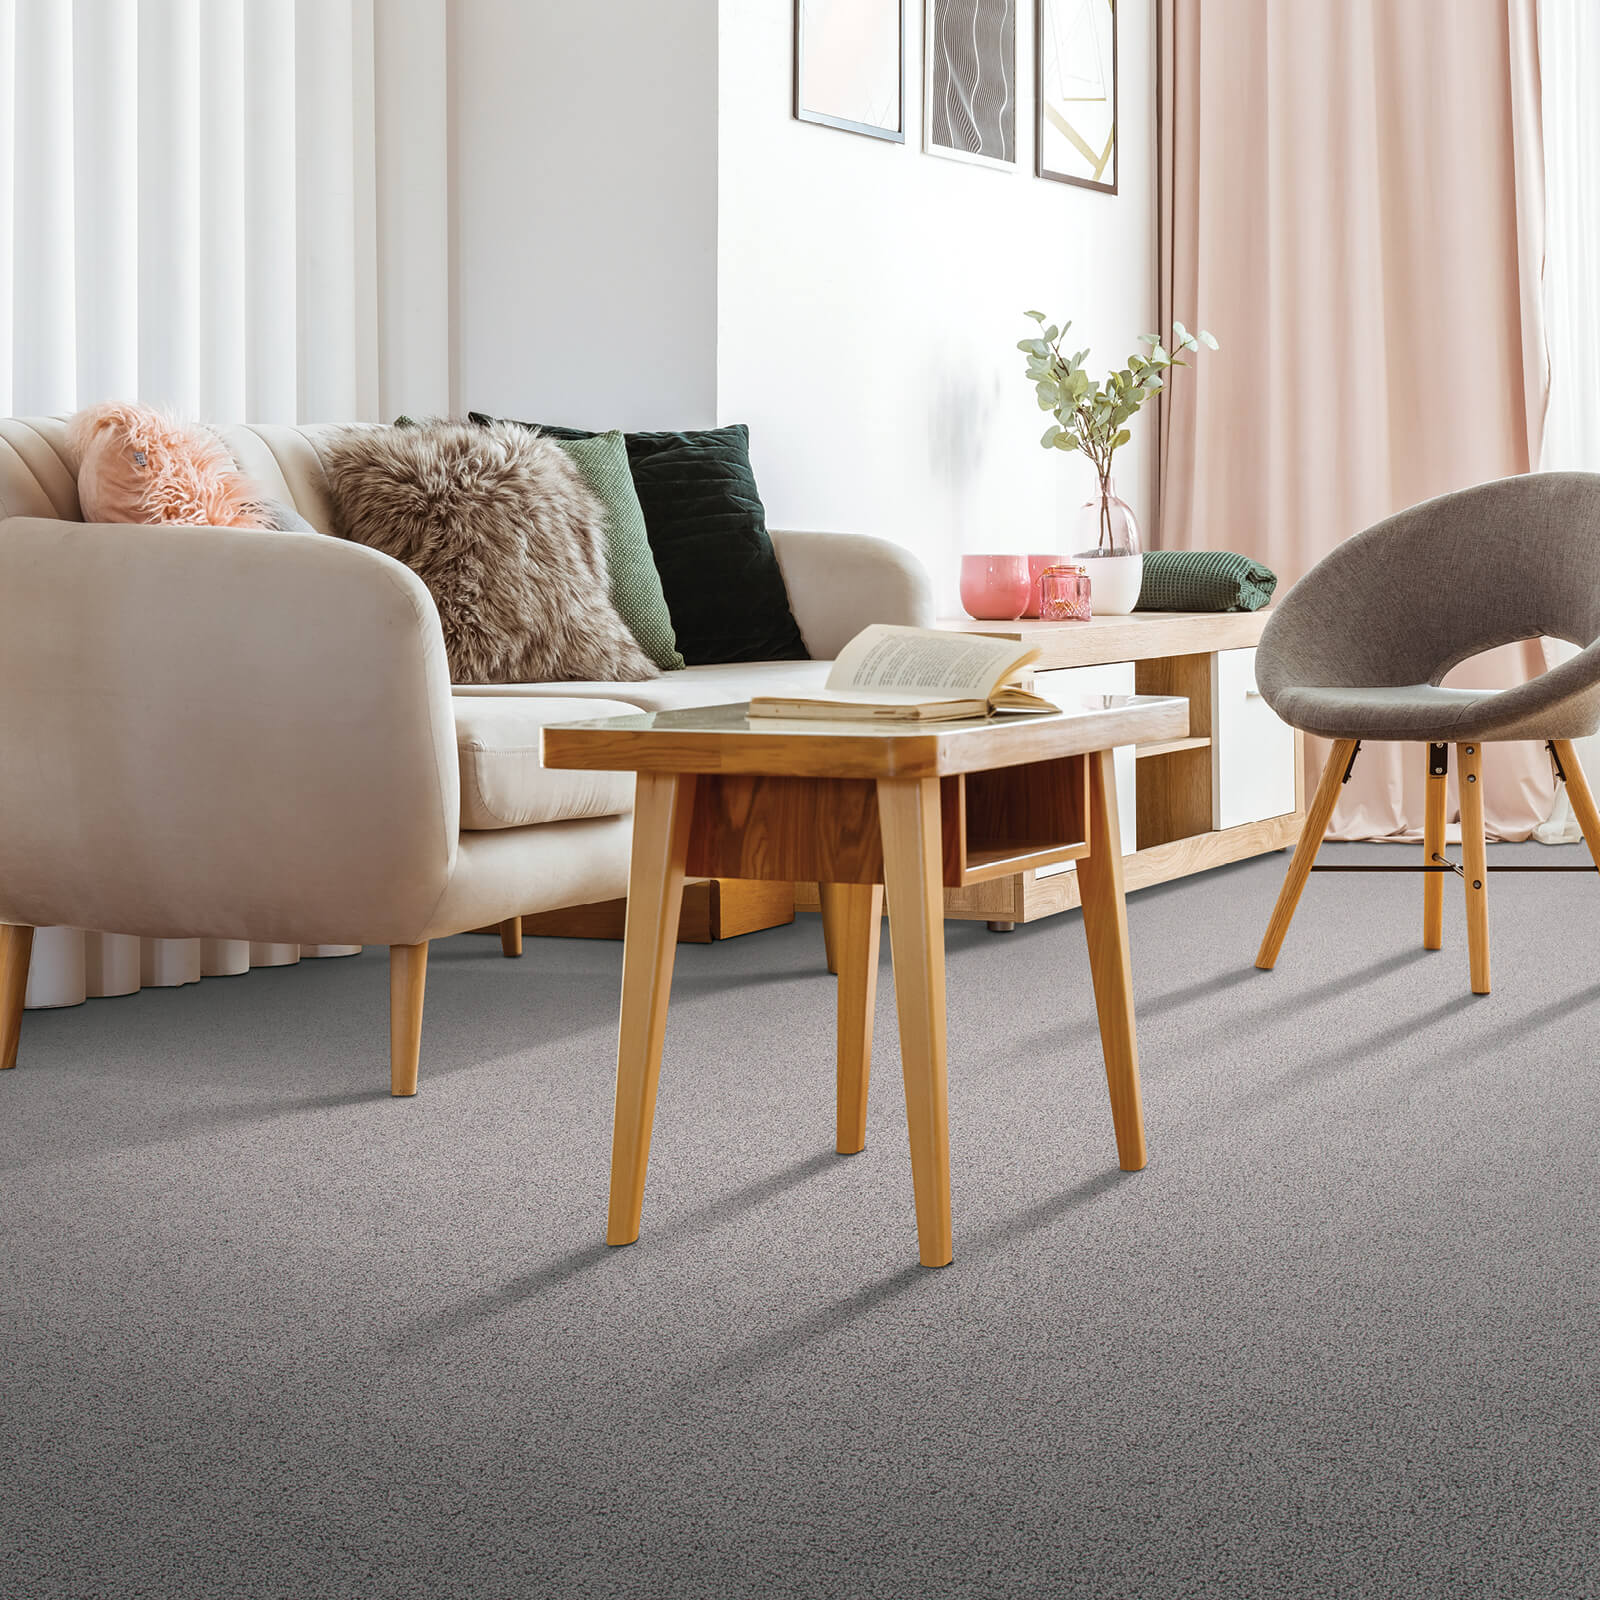 Carpet flooring | Flooring by Wilson's Carpet Plus